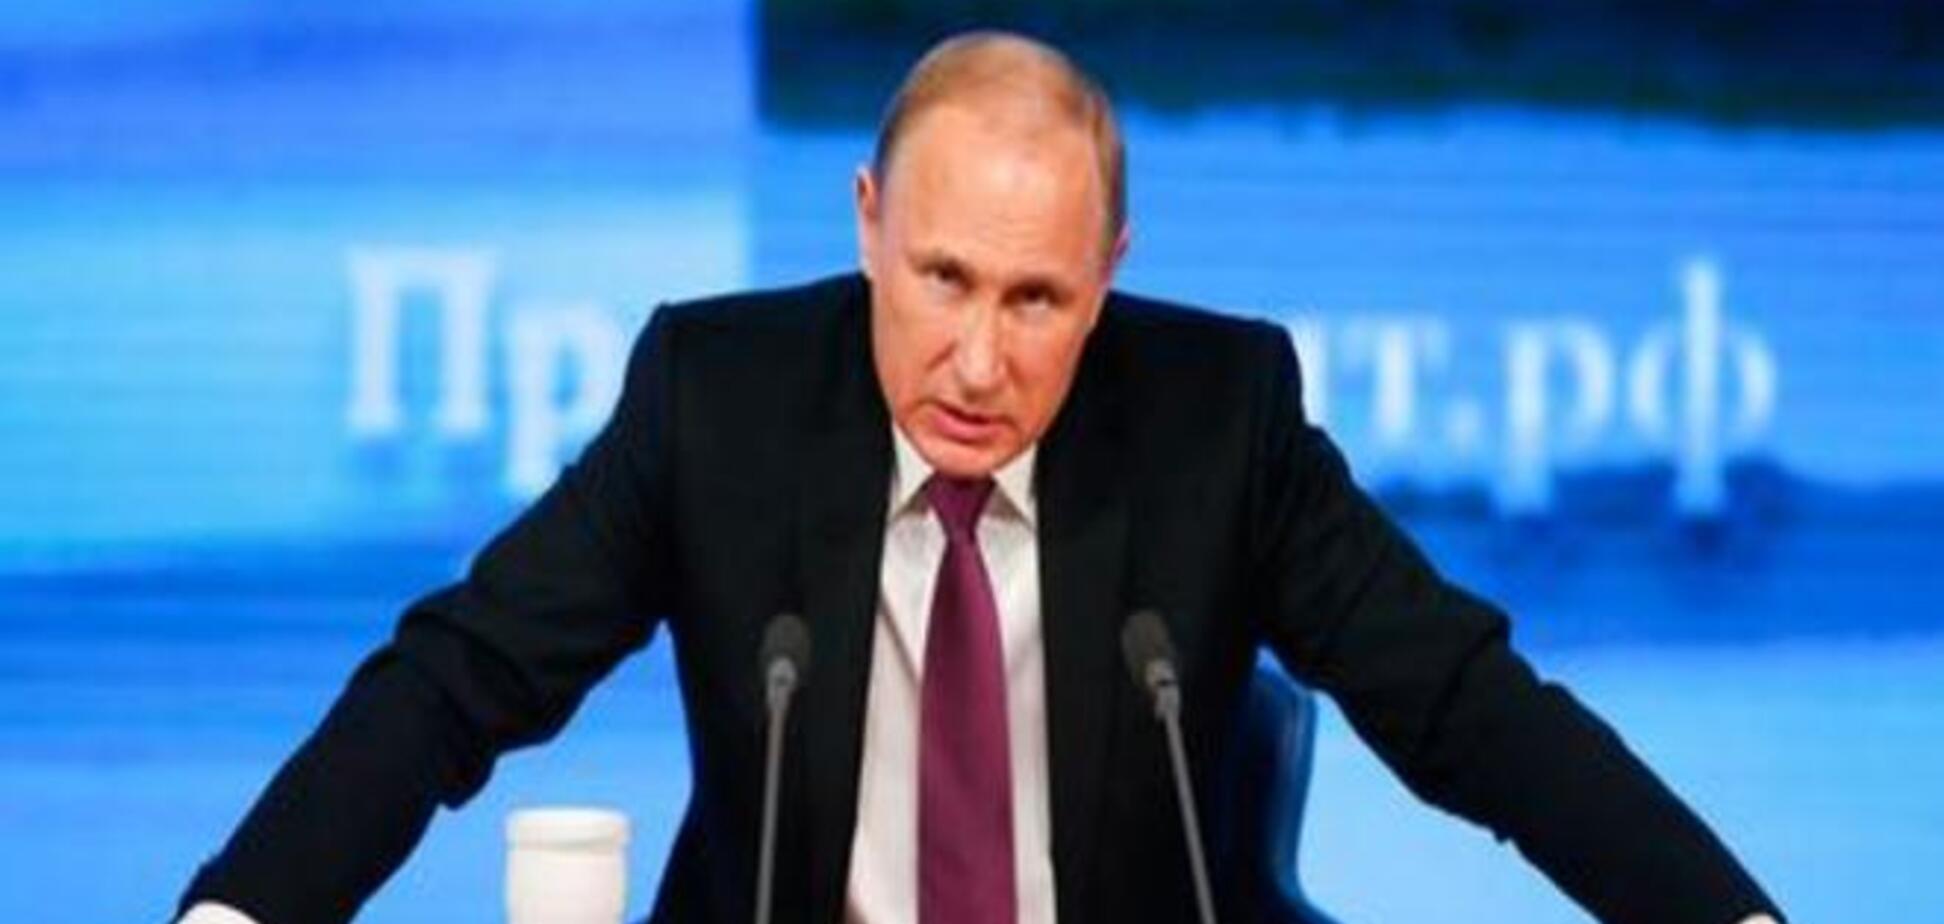 Комментарий: Владимир Путин стал настоящим консерватором